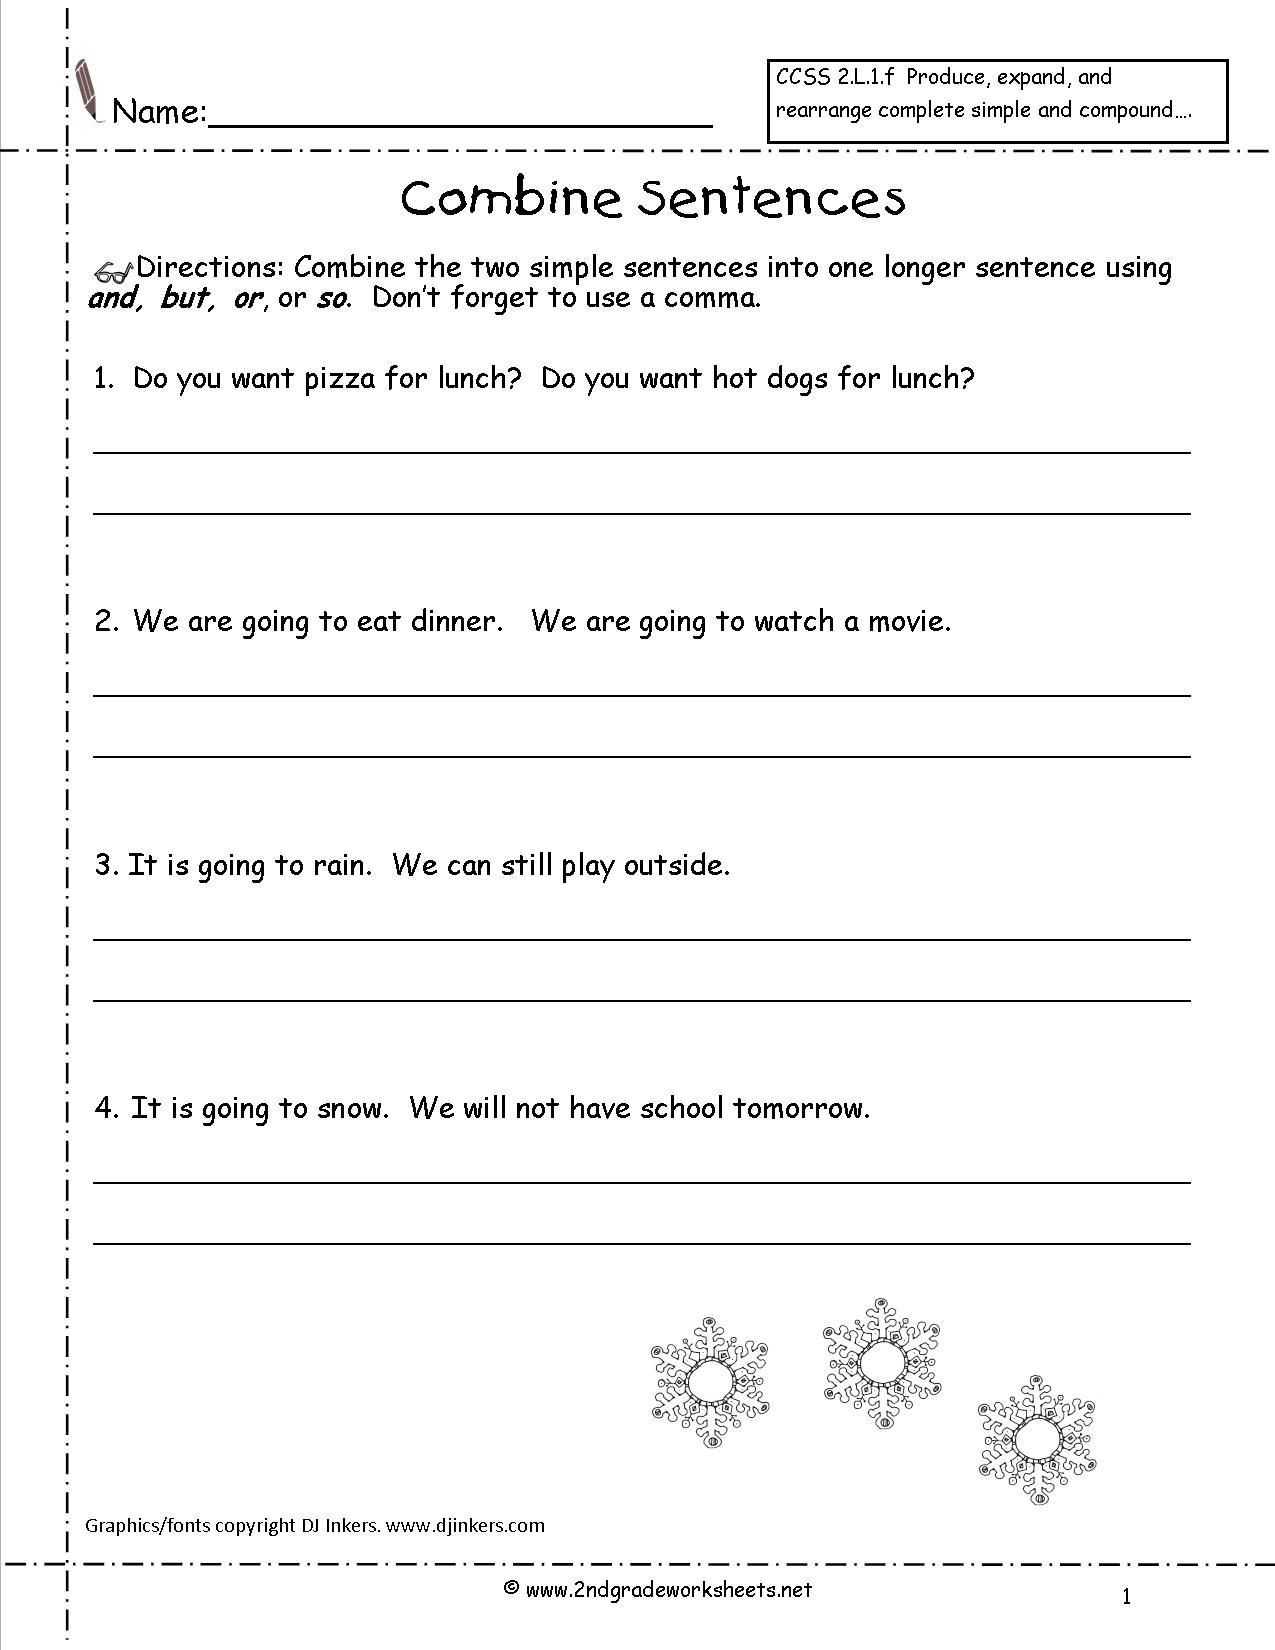 Combining Sentences Printable Worksheets